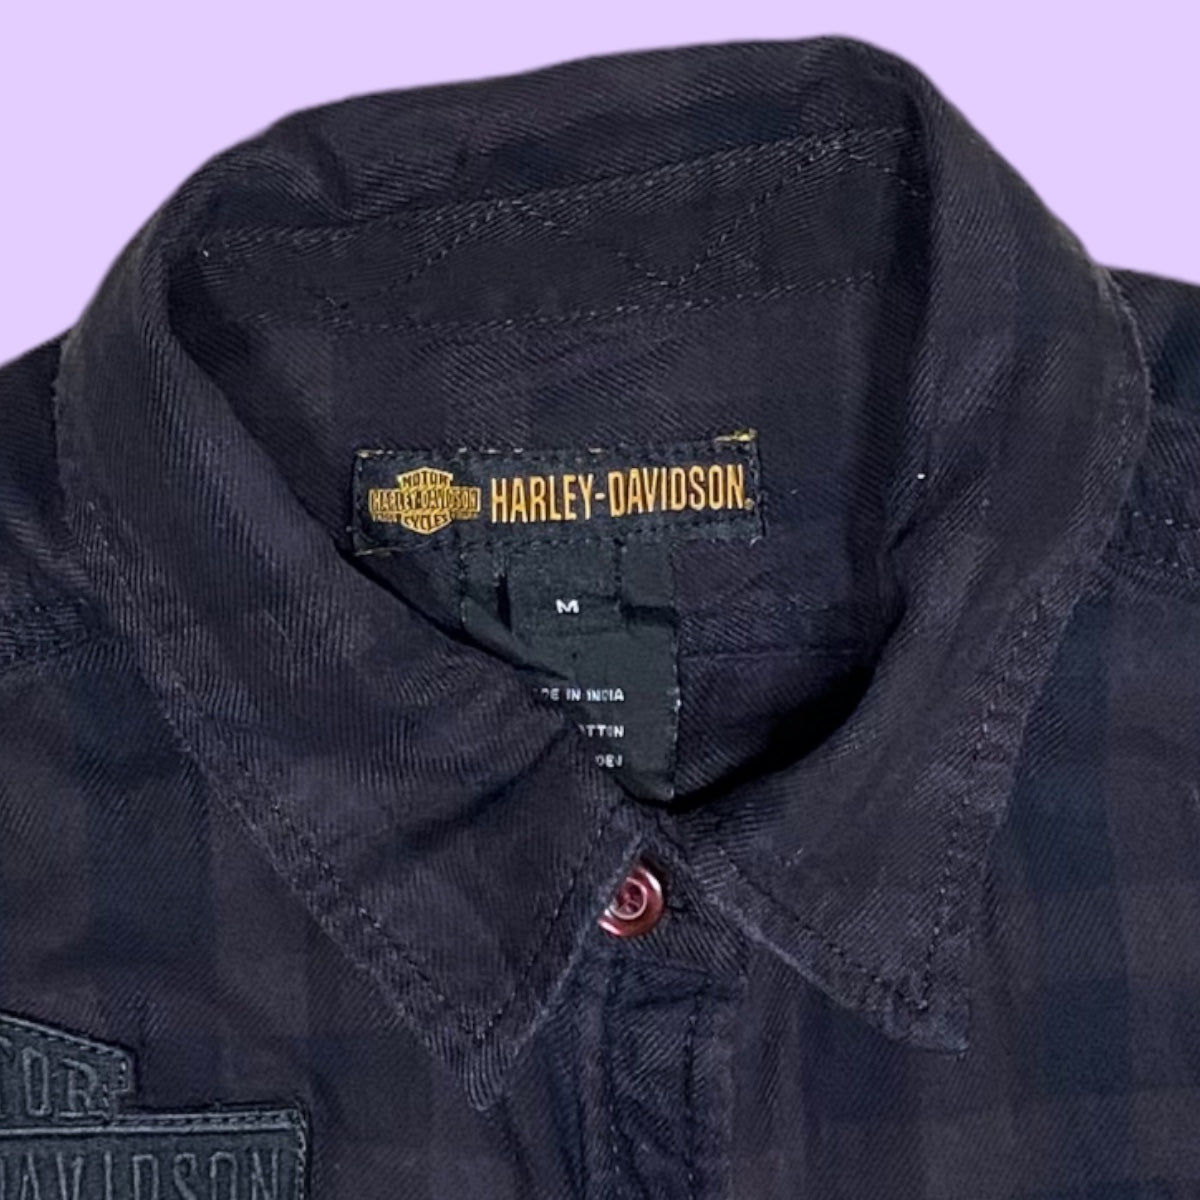 Vintage Harley Davidson checkered shirt - M